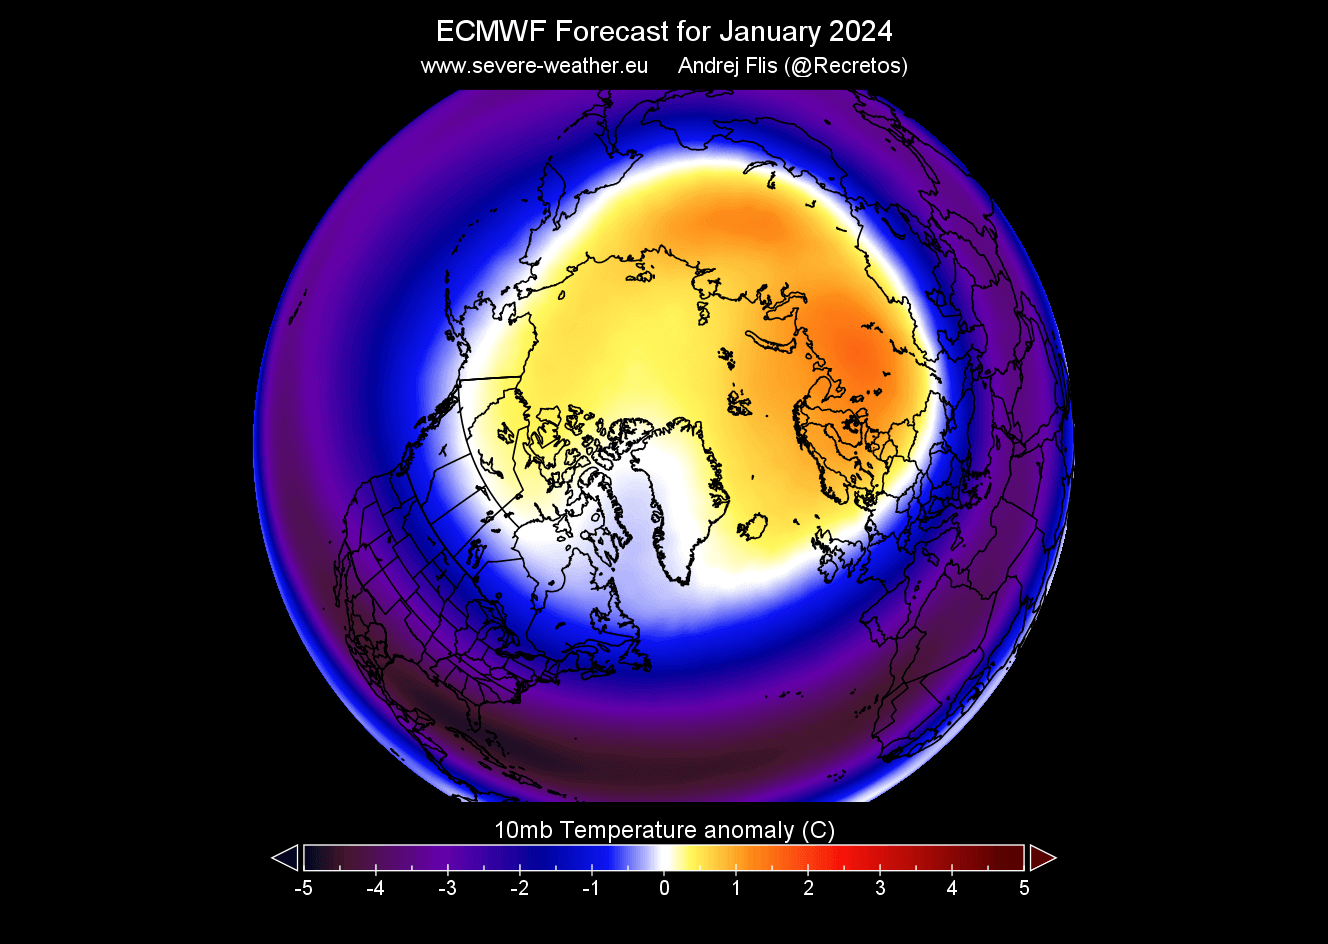 polar-vortex-winter-2023-2024-mid-stratosphere-temperature-anomaly-forecast-january-ssw-ecmwf-latest